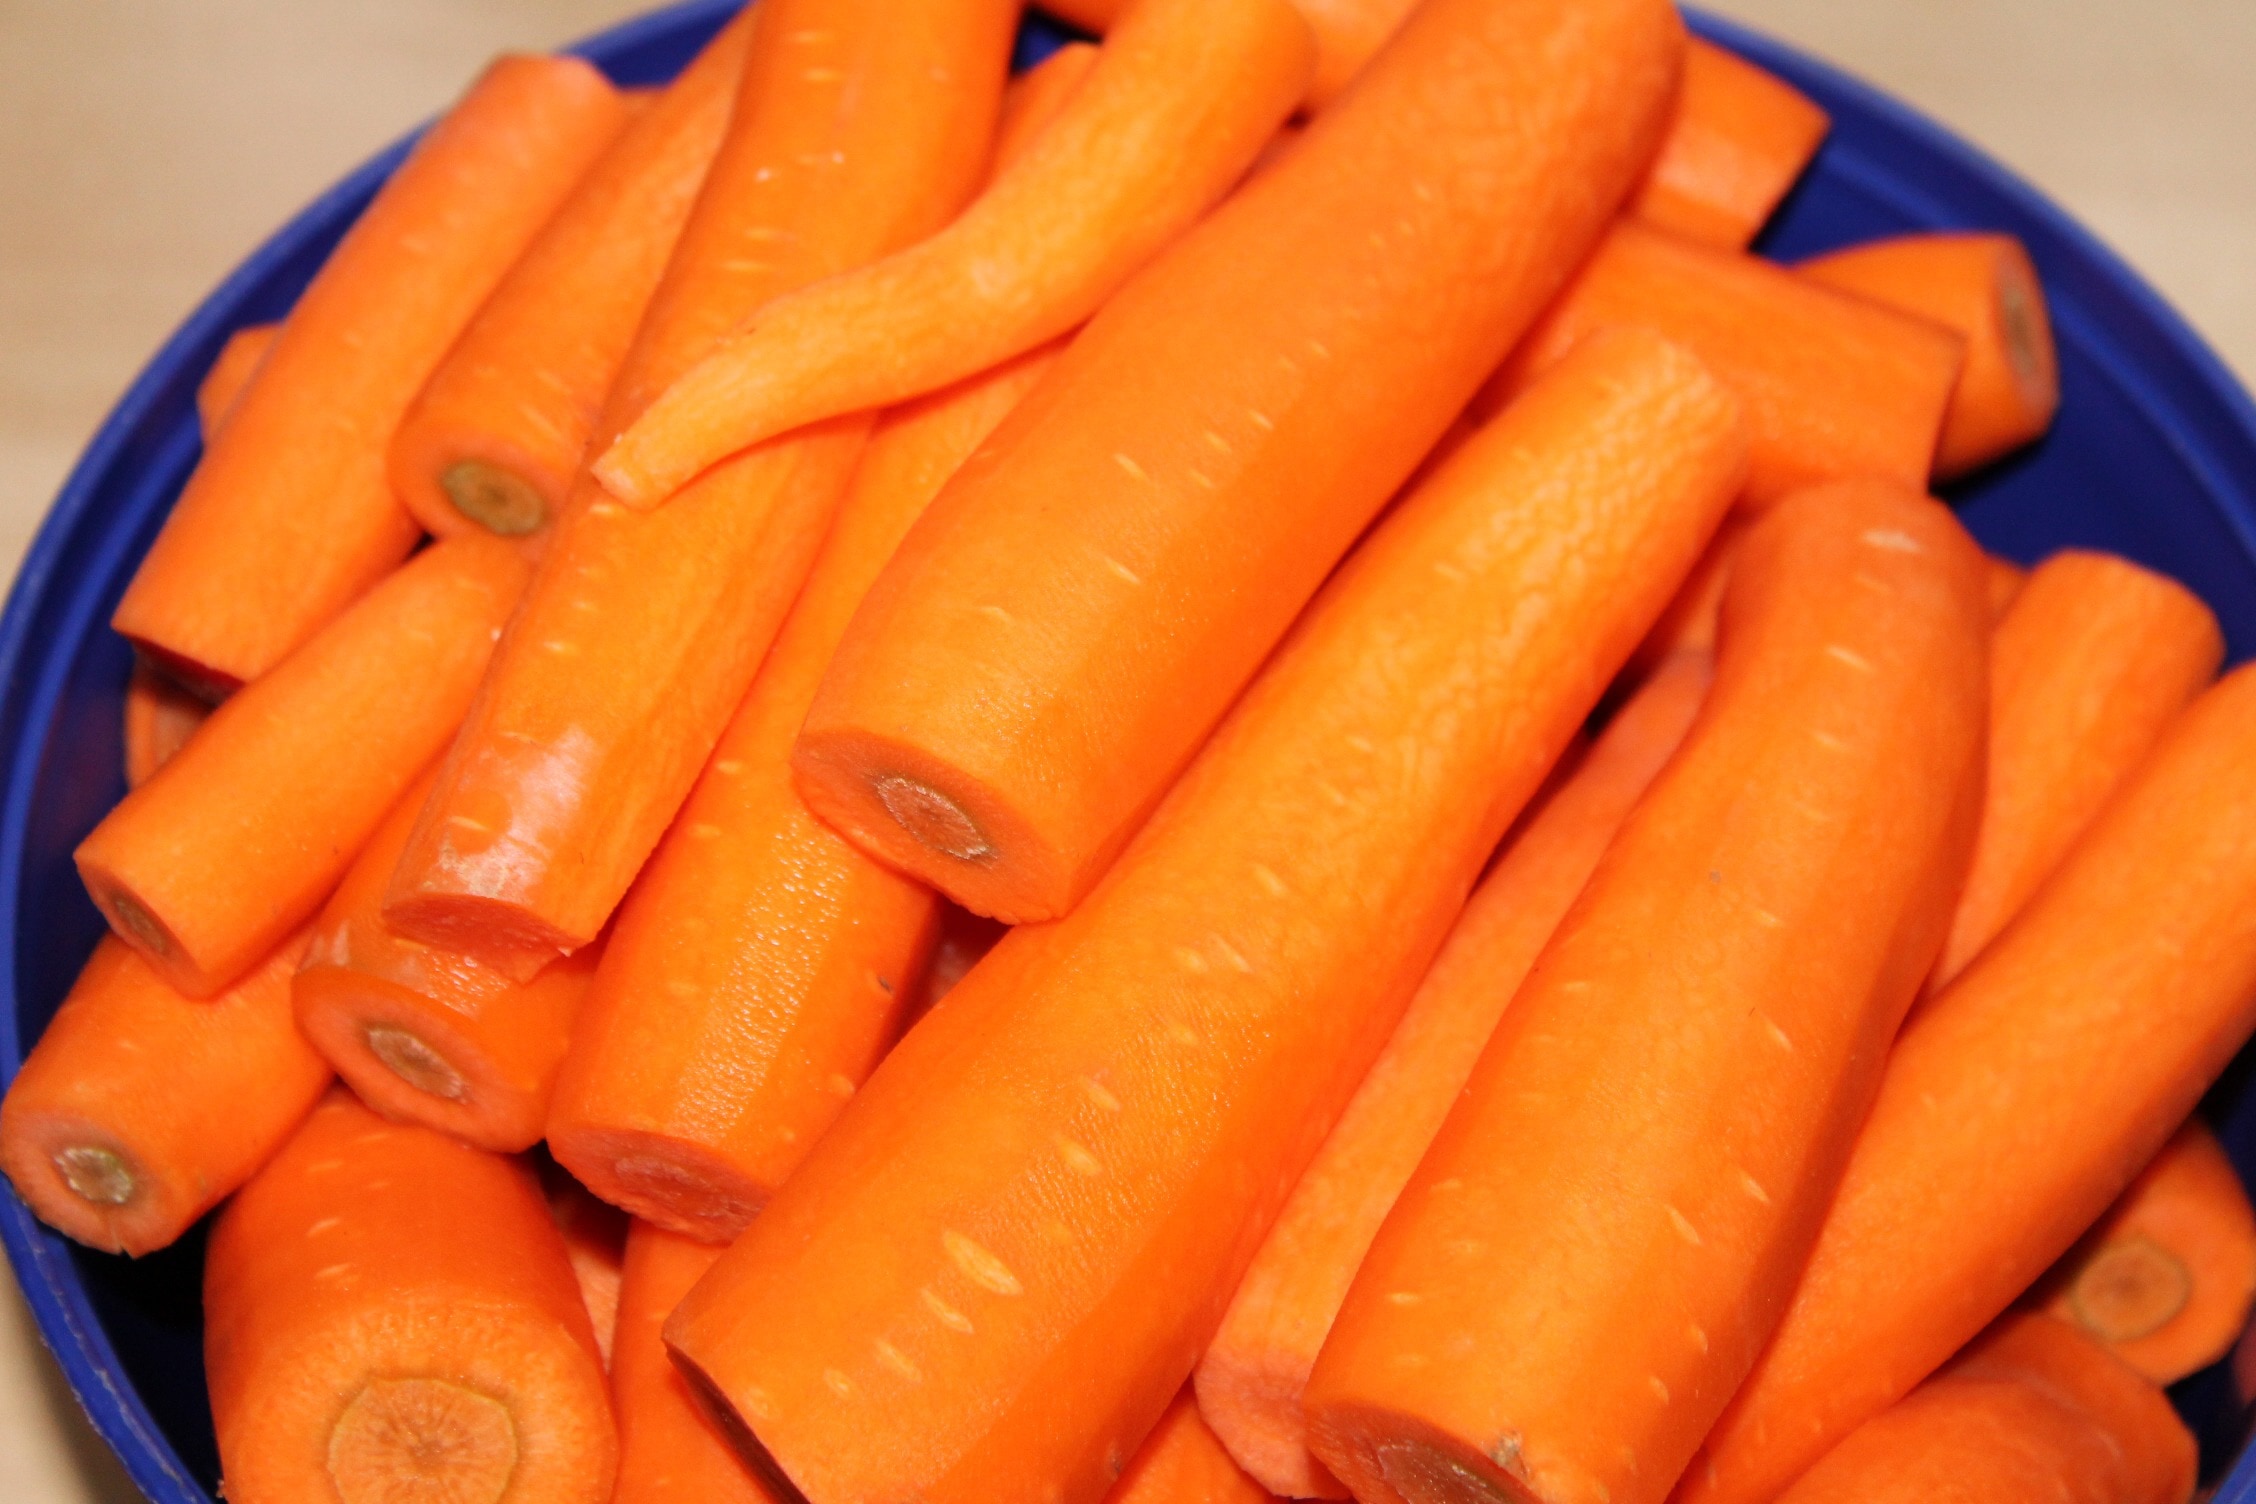 Carrots, Food, Carrot, Vegetables, Cook, orange color, food and drink